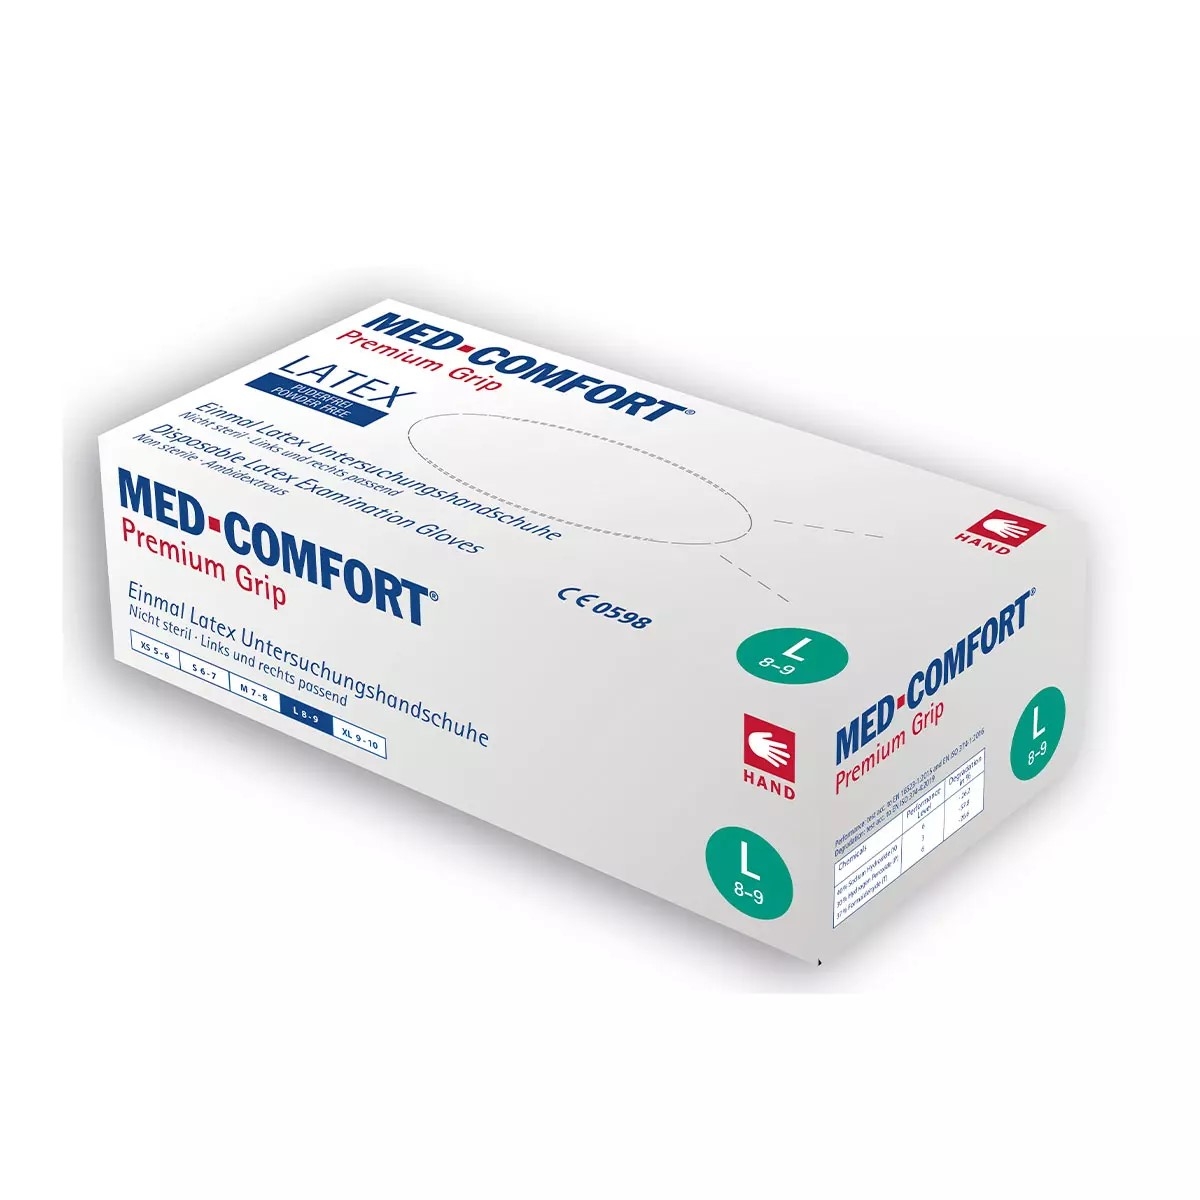 AMPRI-Med-Comfort Premium Grip, Einmal-Latex-Einweghandschuhe, wei, ungepudert, VE= 10 Boxen  100 Stck